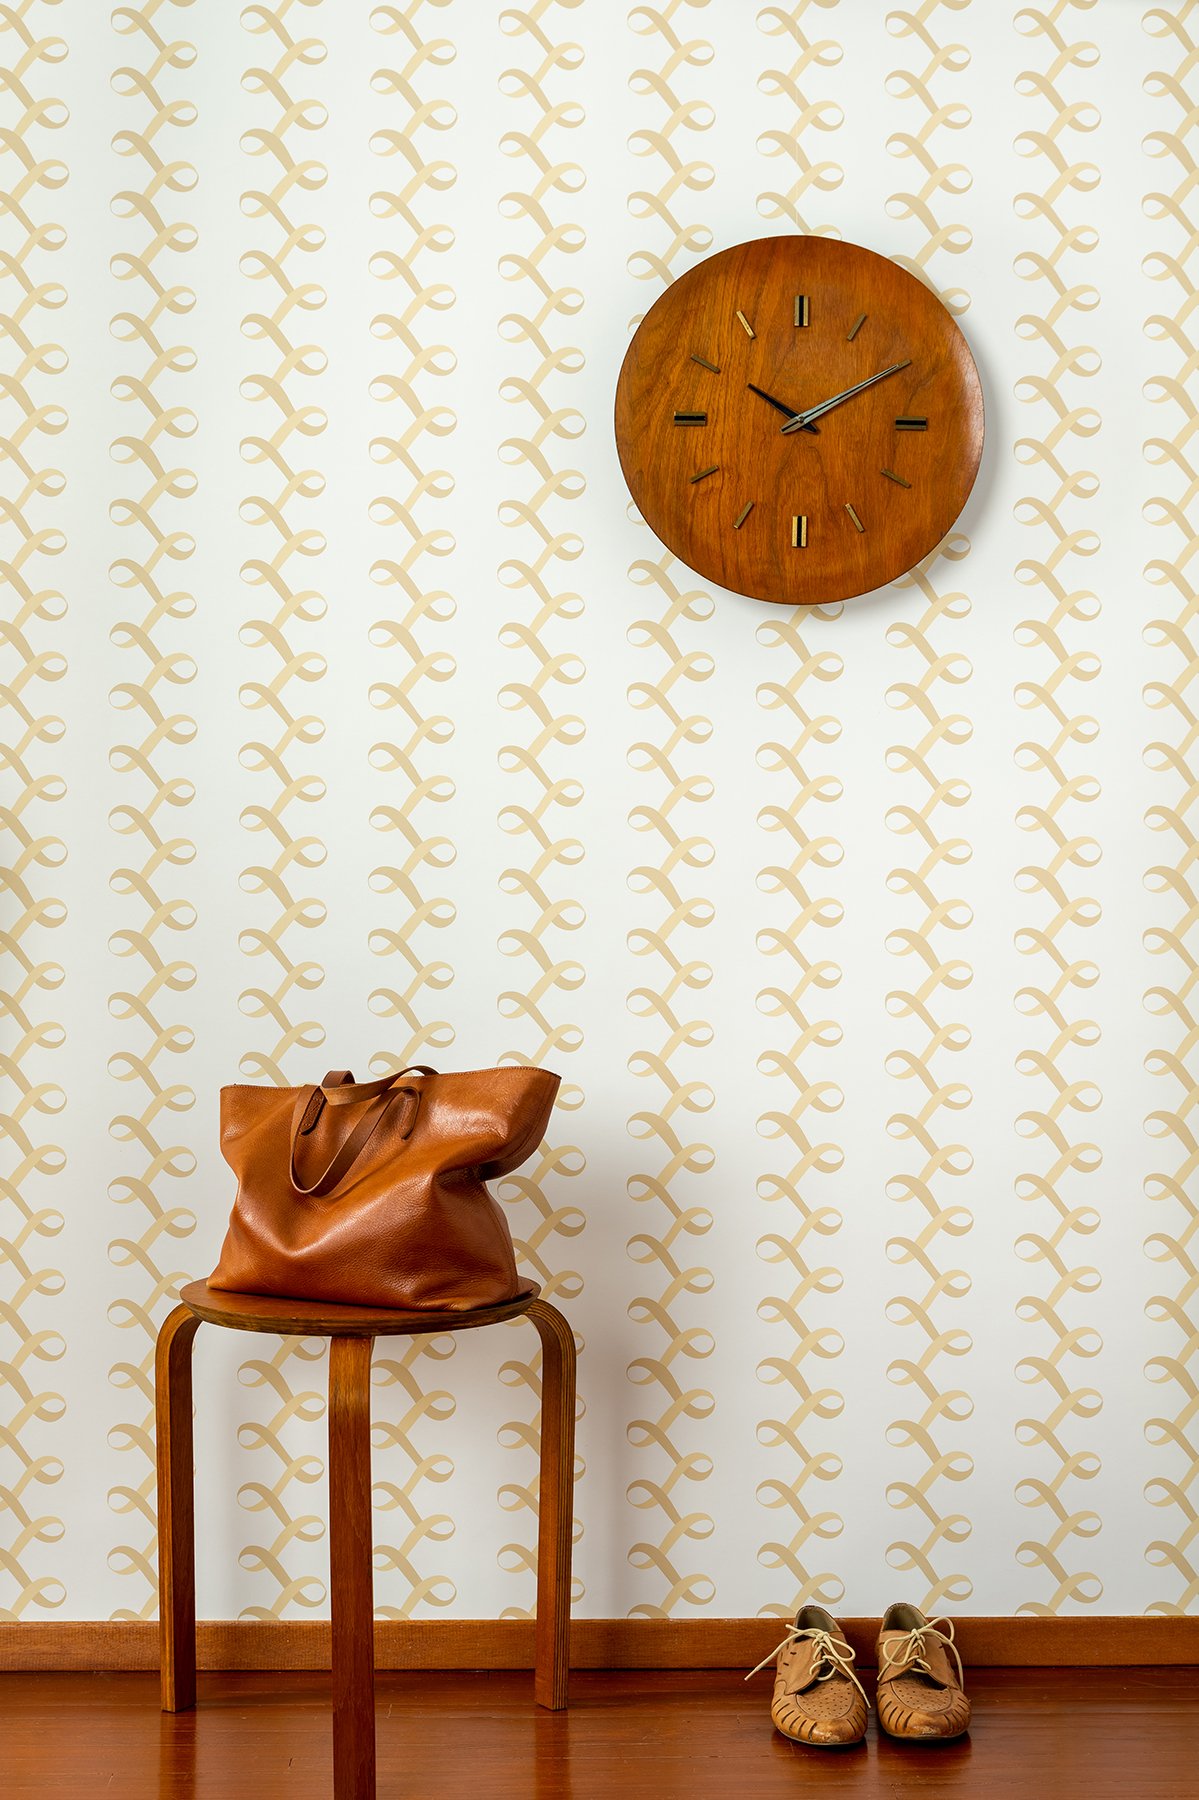 Kate Golding Ribbons Gold wallpaper // Modern wallcoverings and interior decor.